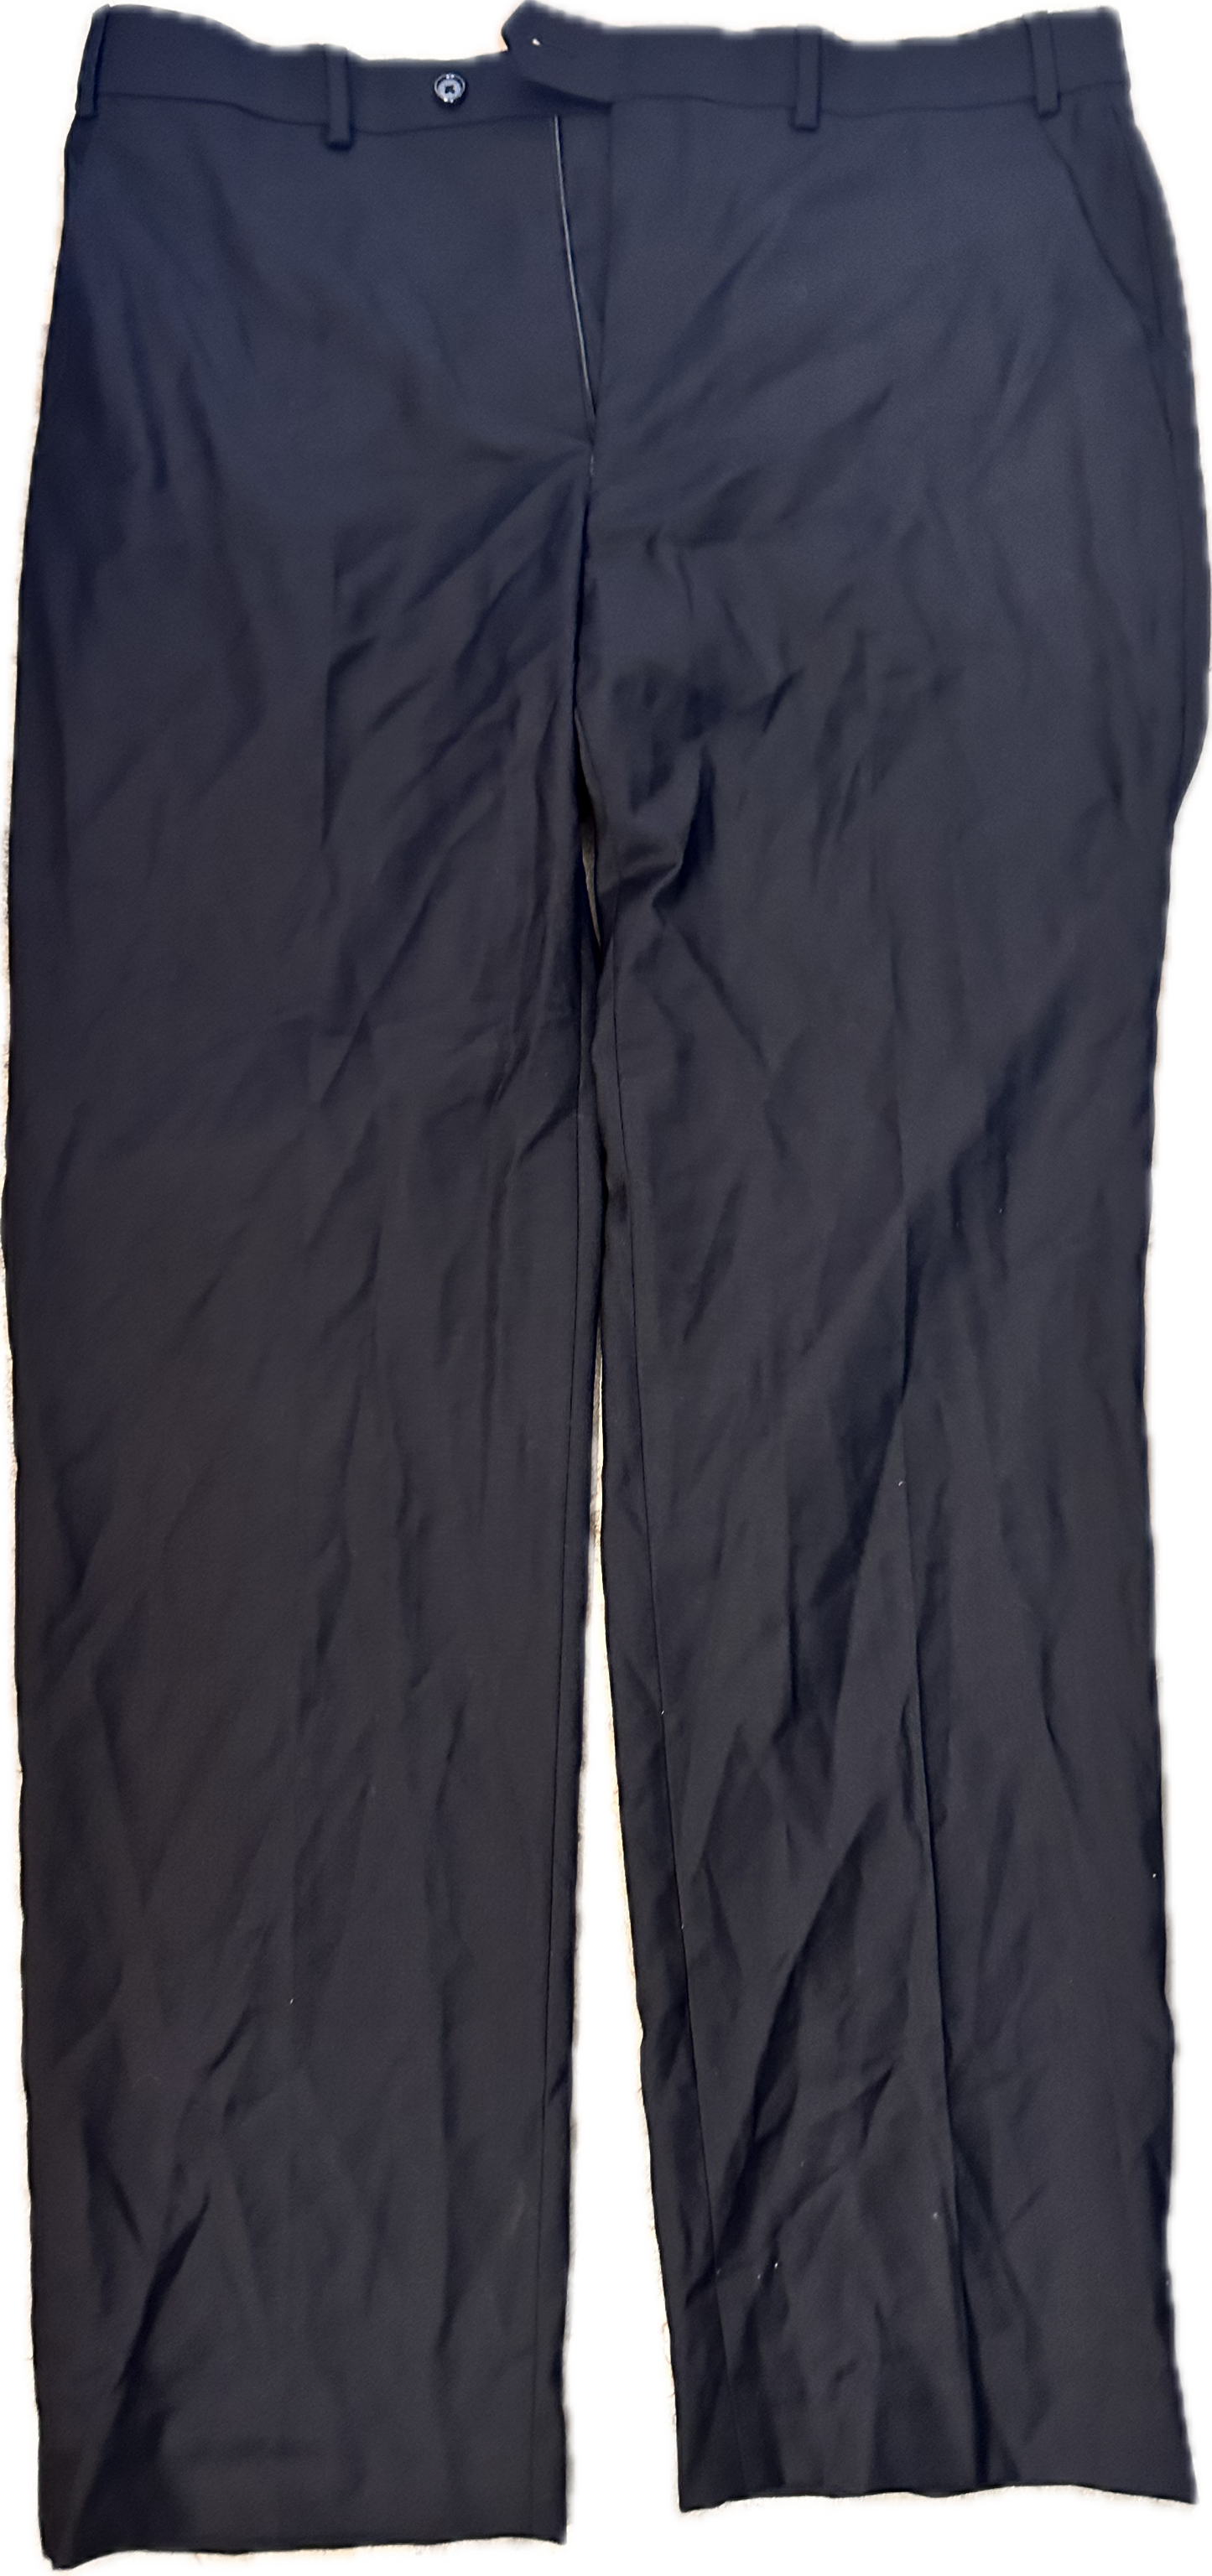 MAD MEN: Don's Vintage Polo Black Flat Front Pants (36)